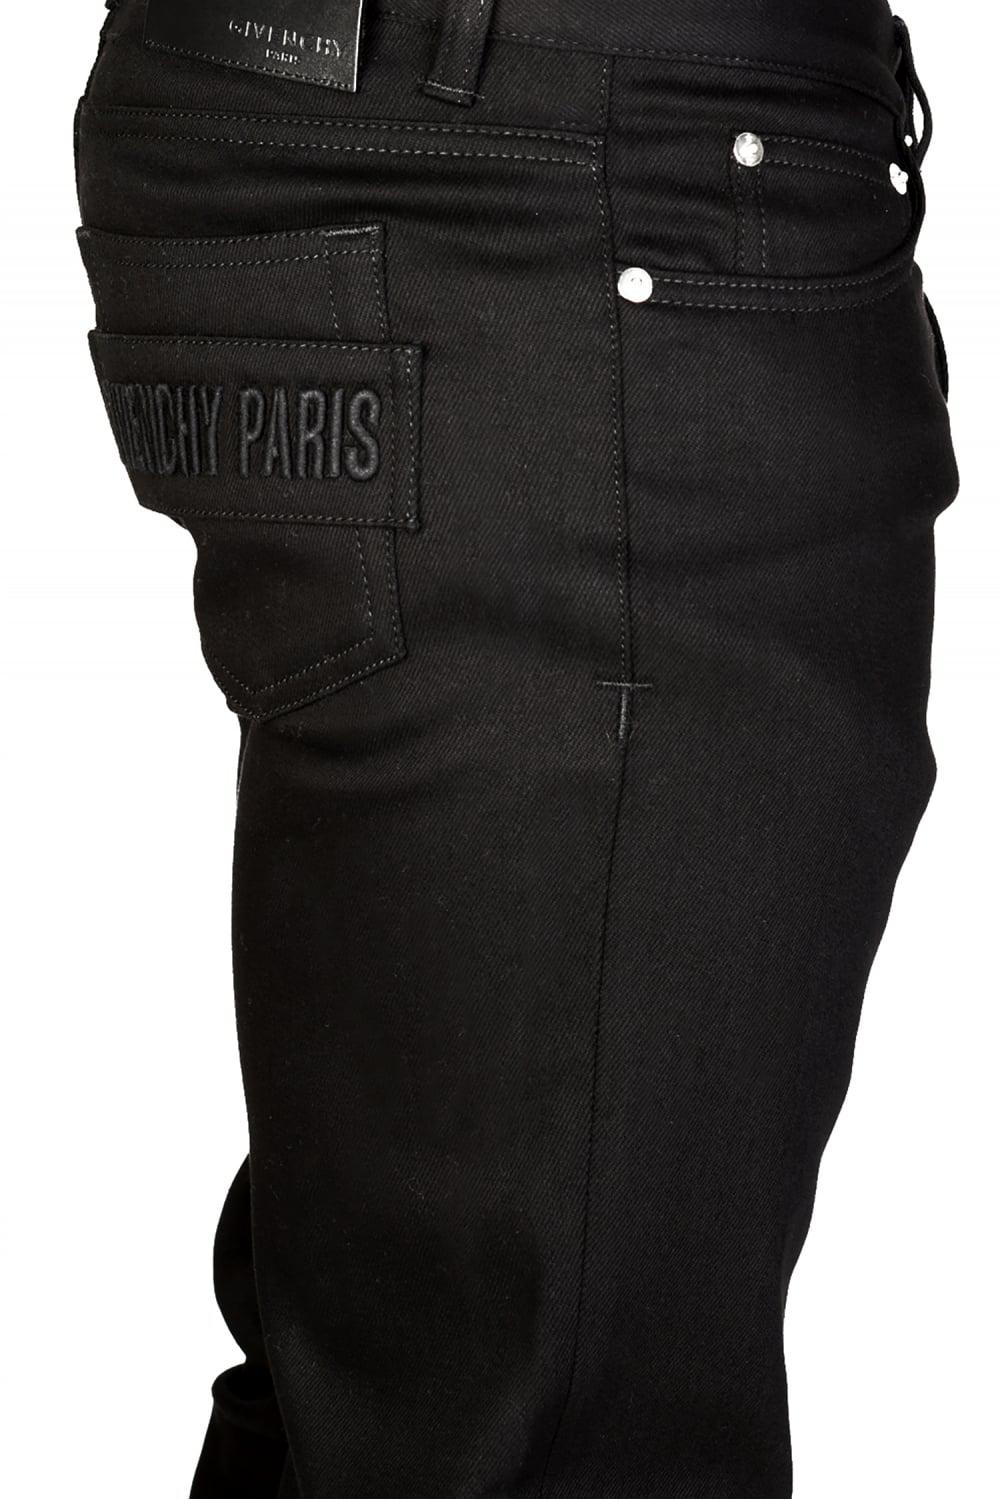 Givenchy Denim Paris Tape Logo Jeans Black for Men - Lyst